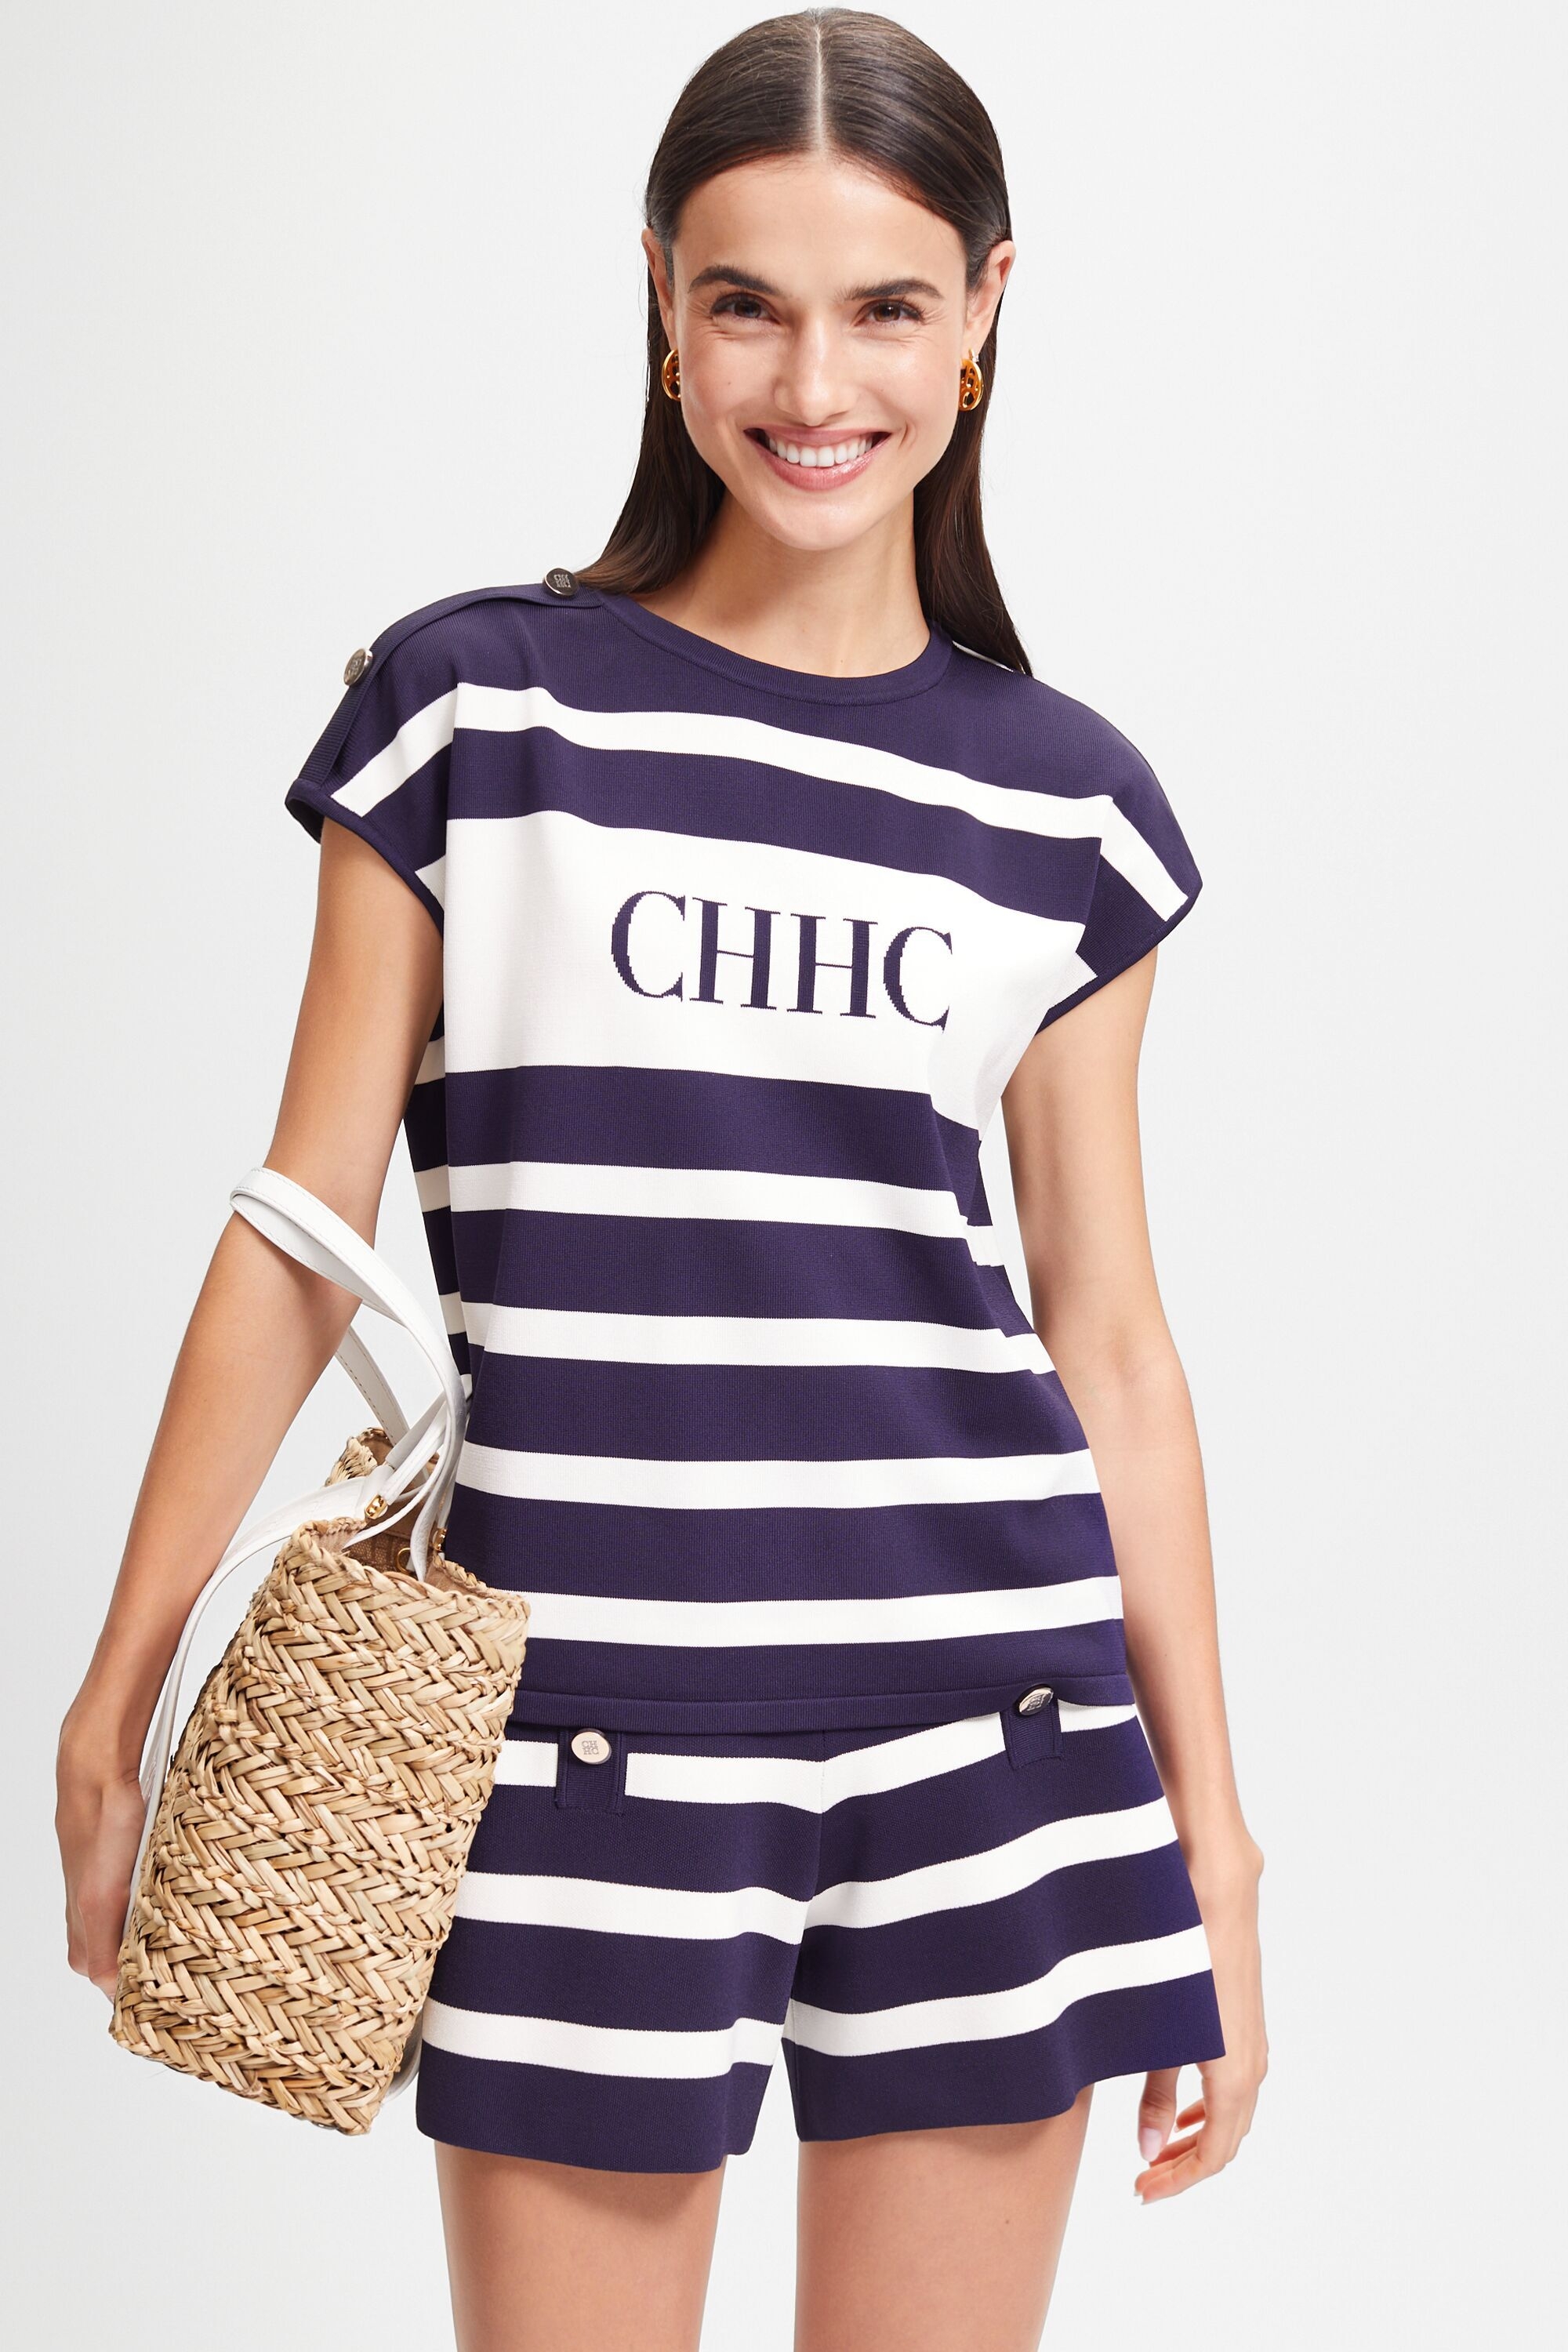 CH intarsia striped knit top